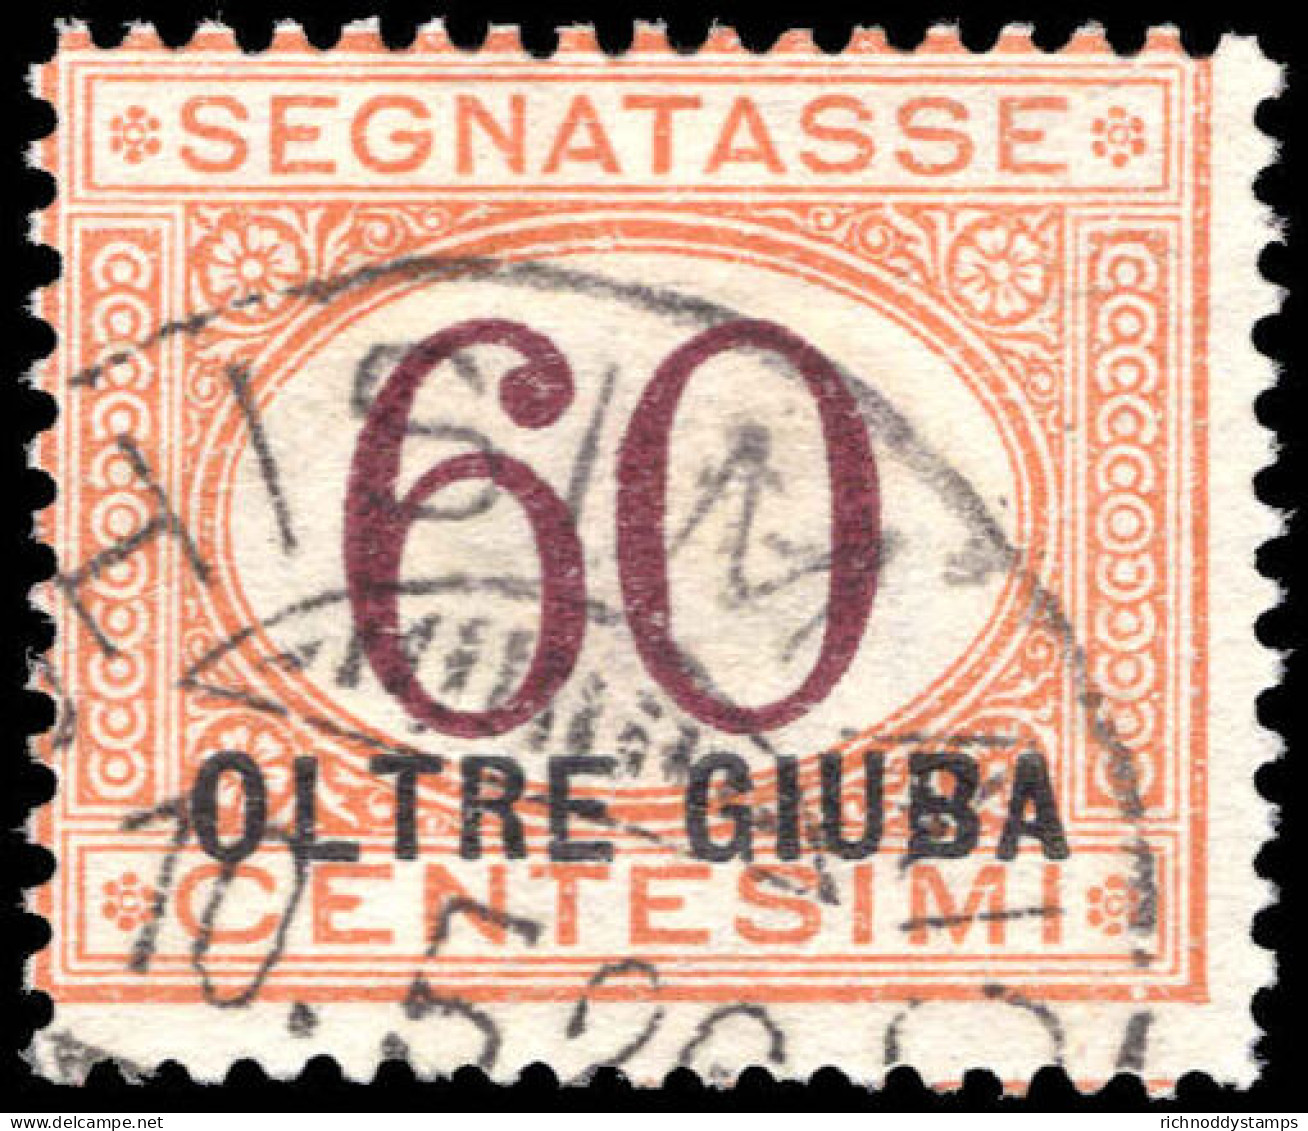 Jubaland 1925 60c Magenta And Orange Postage Due Fine Used. - Oltre Giuba